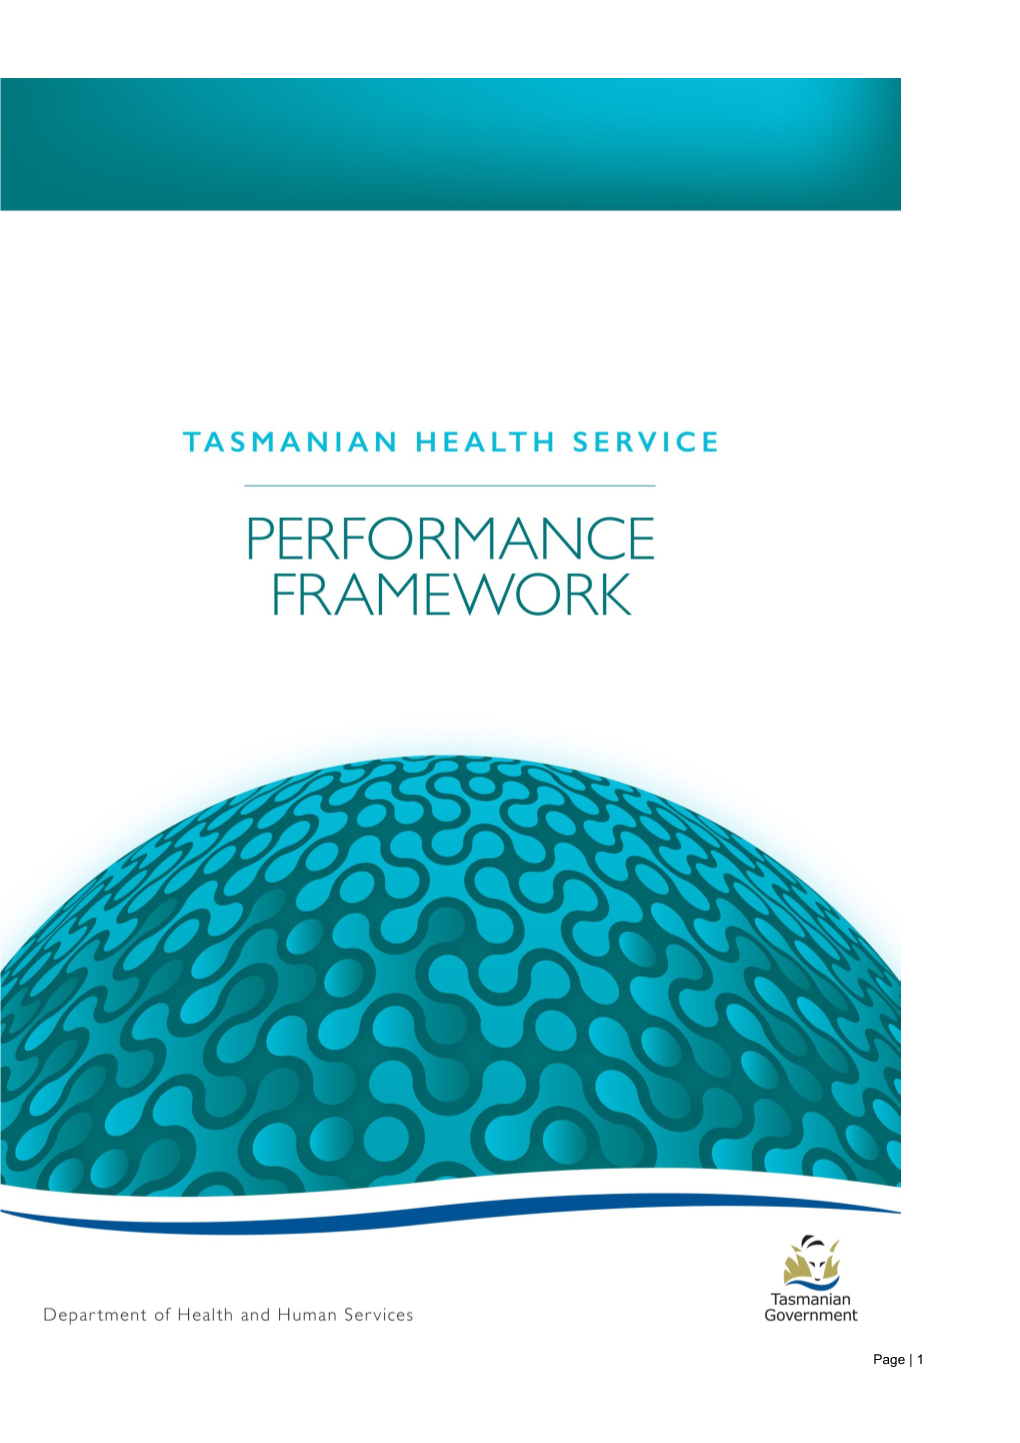 Tasmanian Health Service Performance Framework